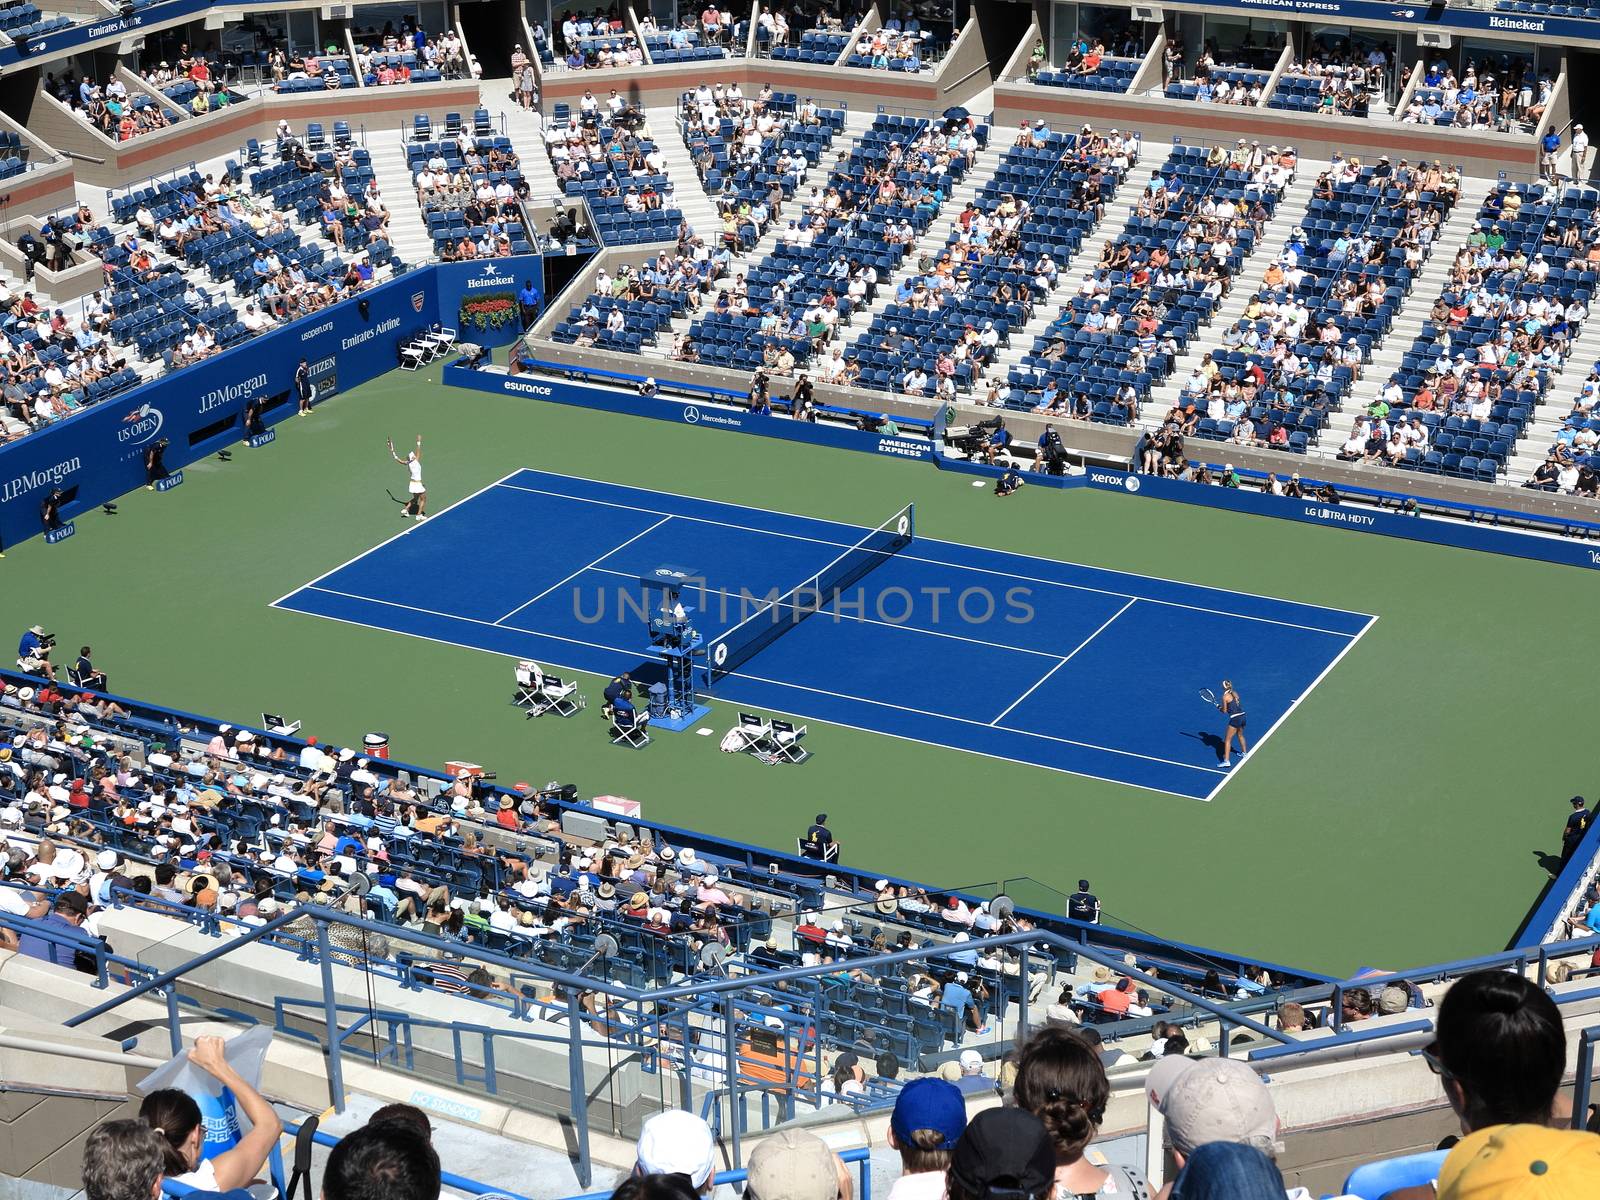 A crowded Arthur Ashe Stadium for a 2014 U.S. Open tennis match, Azarenka vs Makarova.